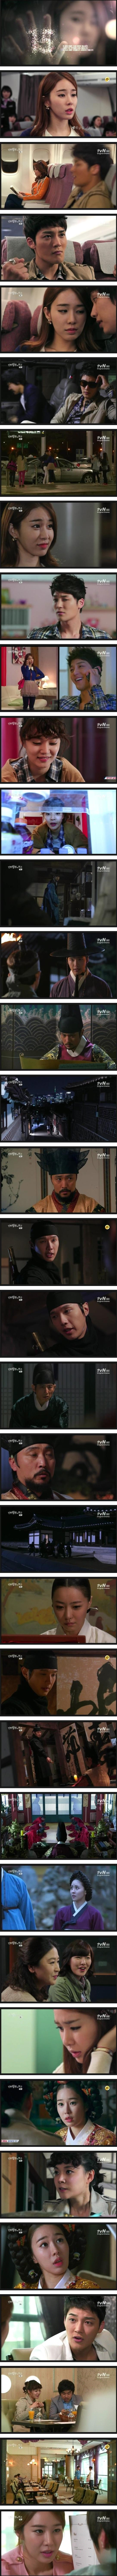 episode 7 captures for the Korean drama 'Queen In-hyun's Man'